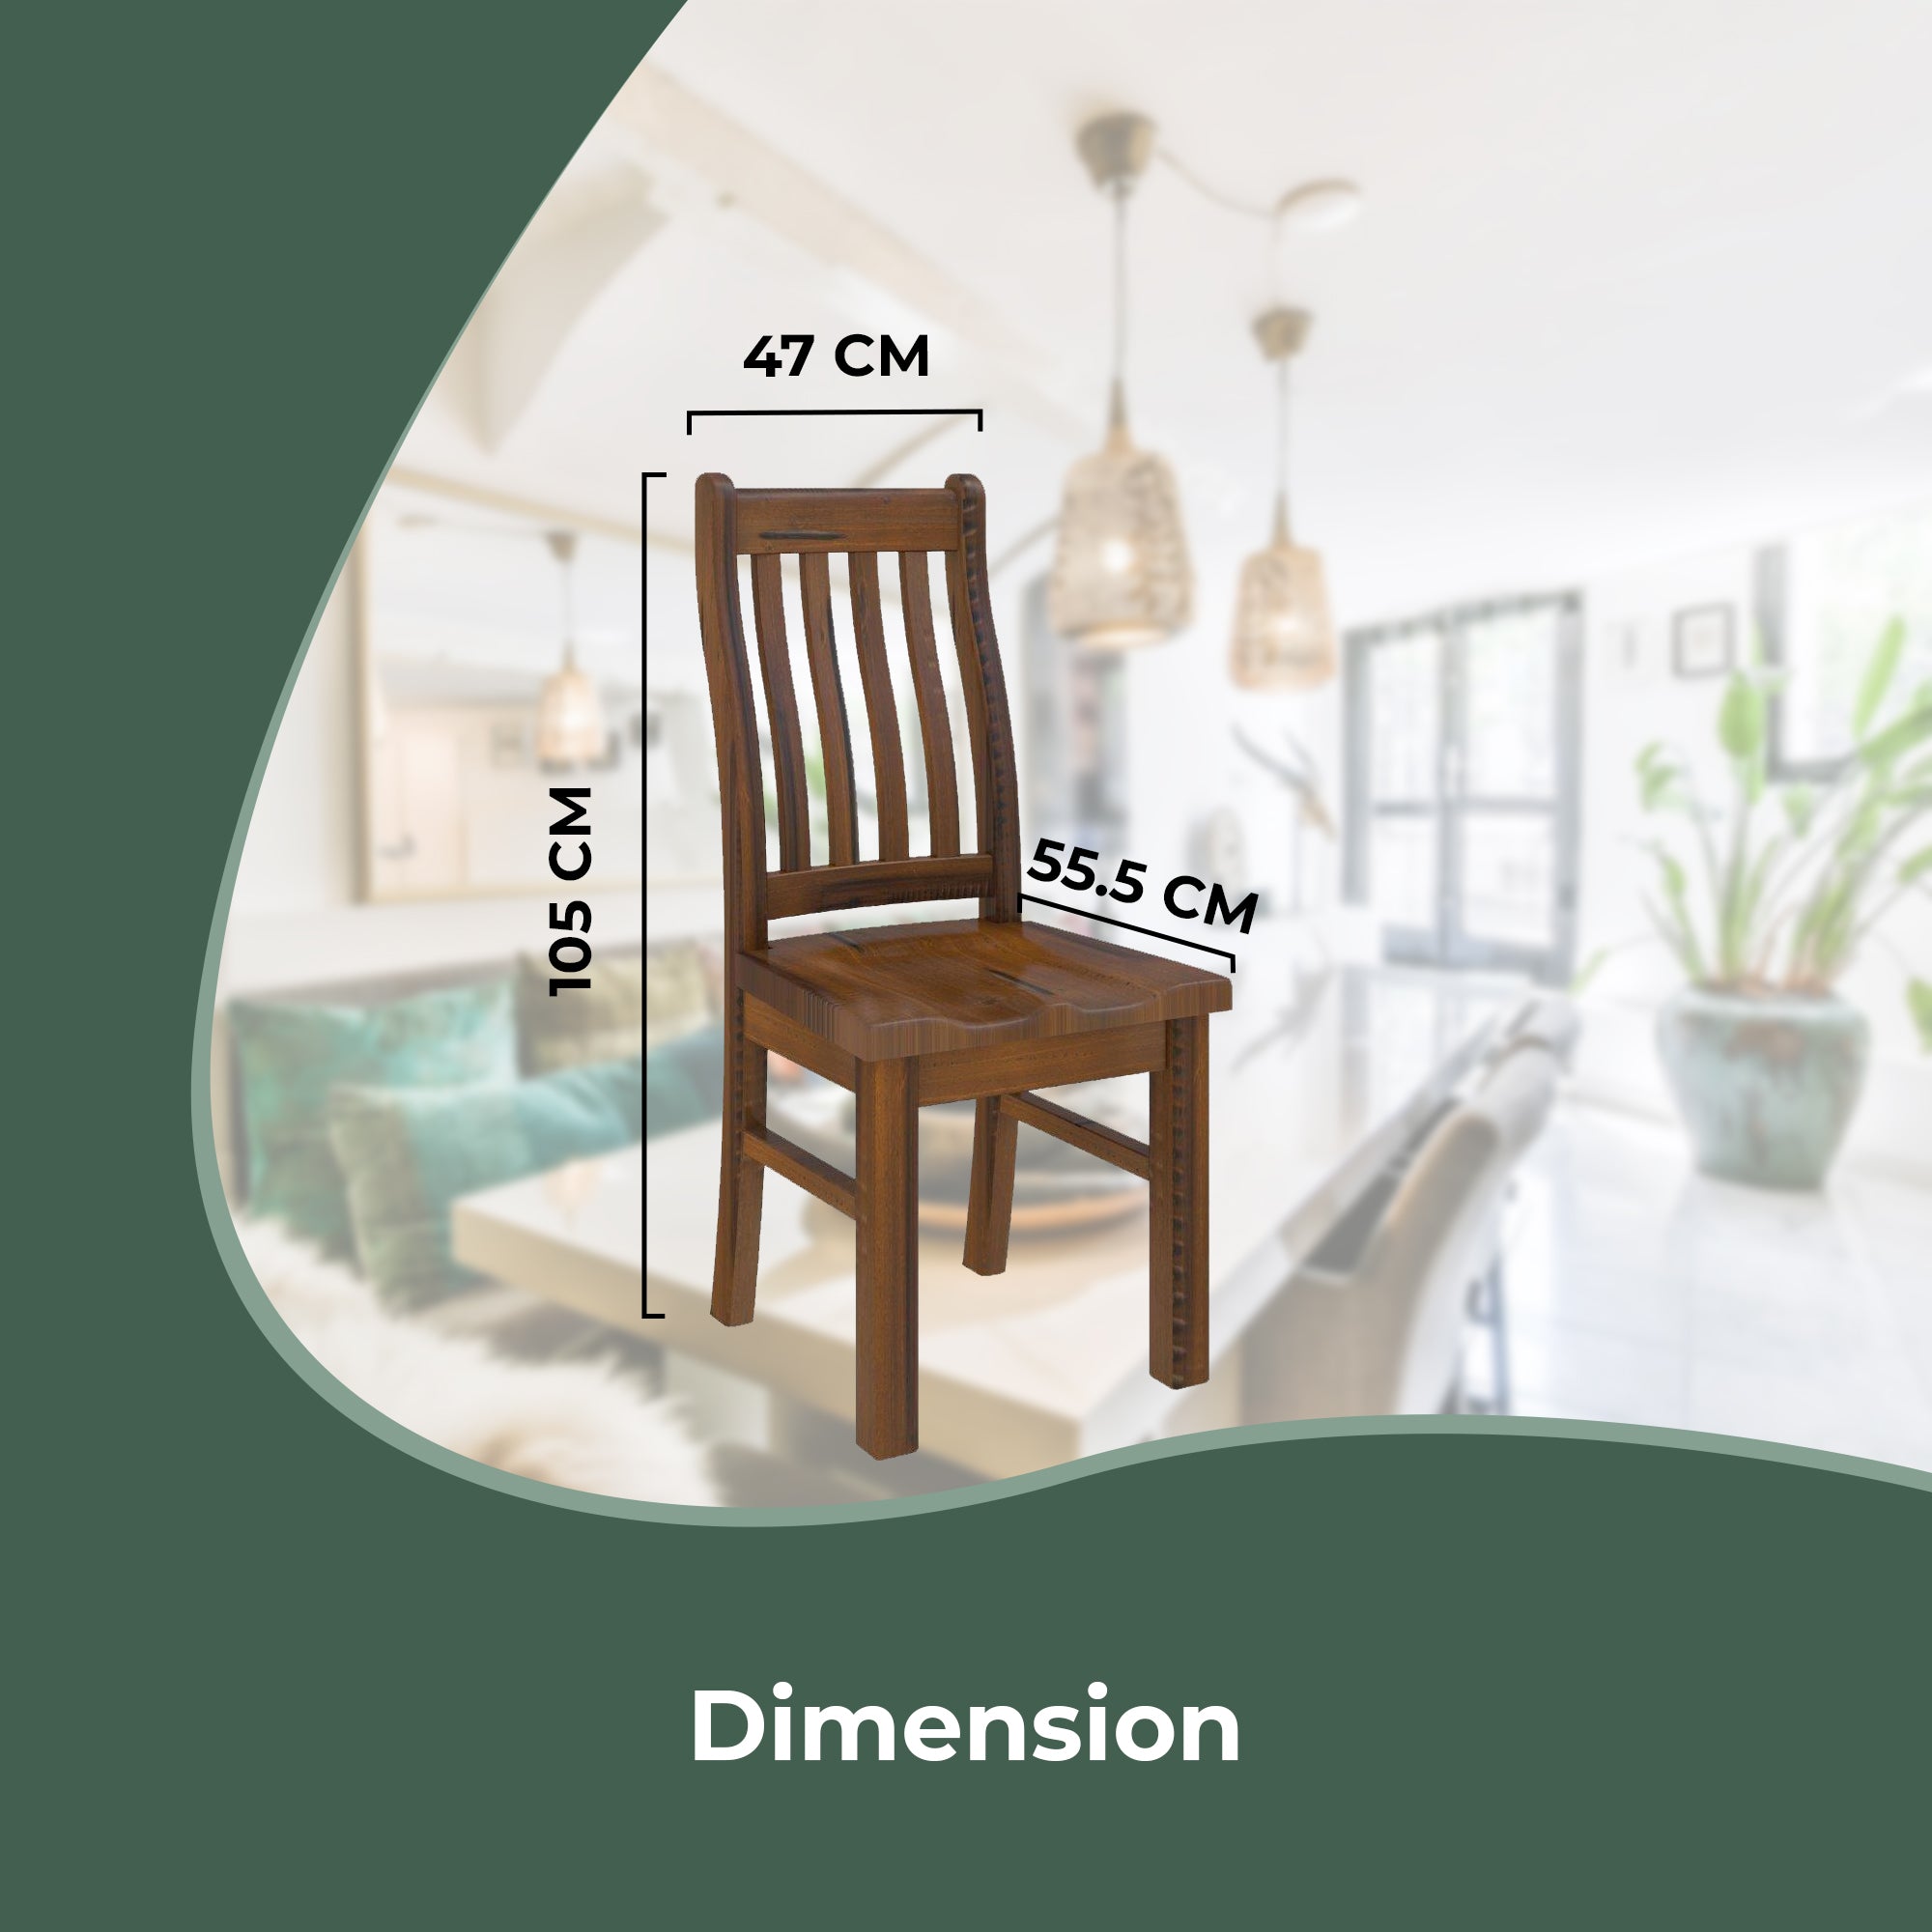 Umber Dining Chair Set of 2 Solid Pine Wood Home Dinner Furniture - Dark Brown